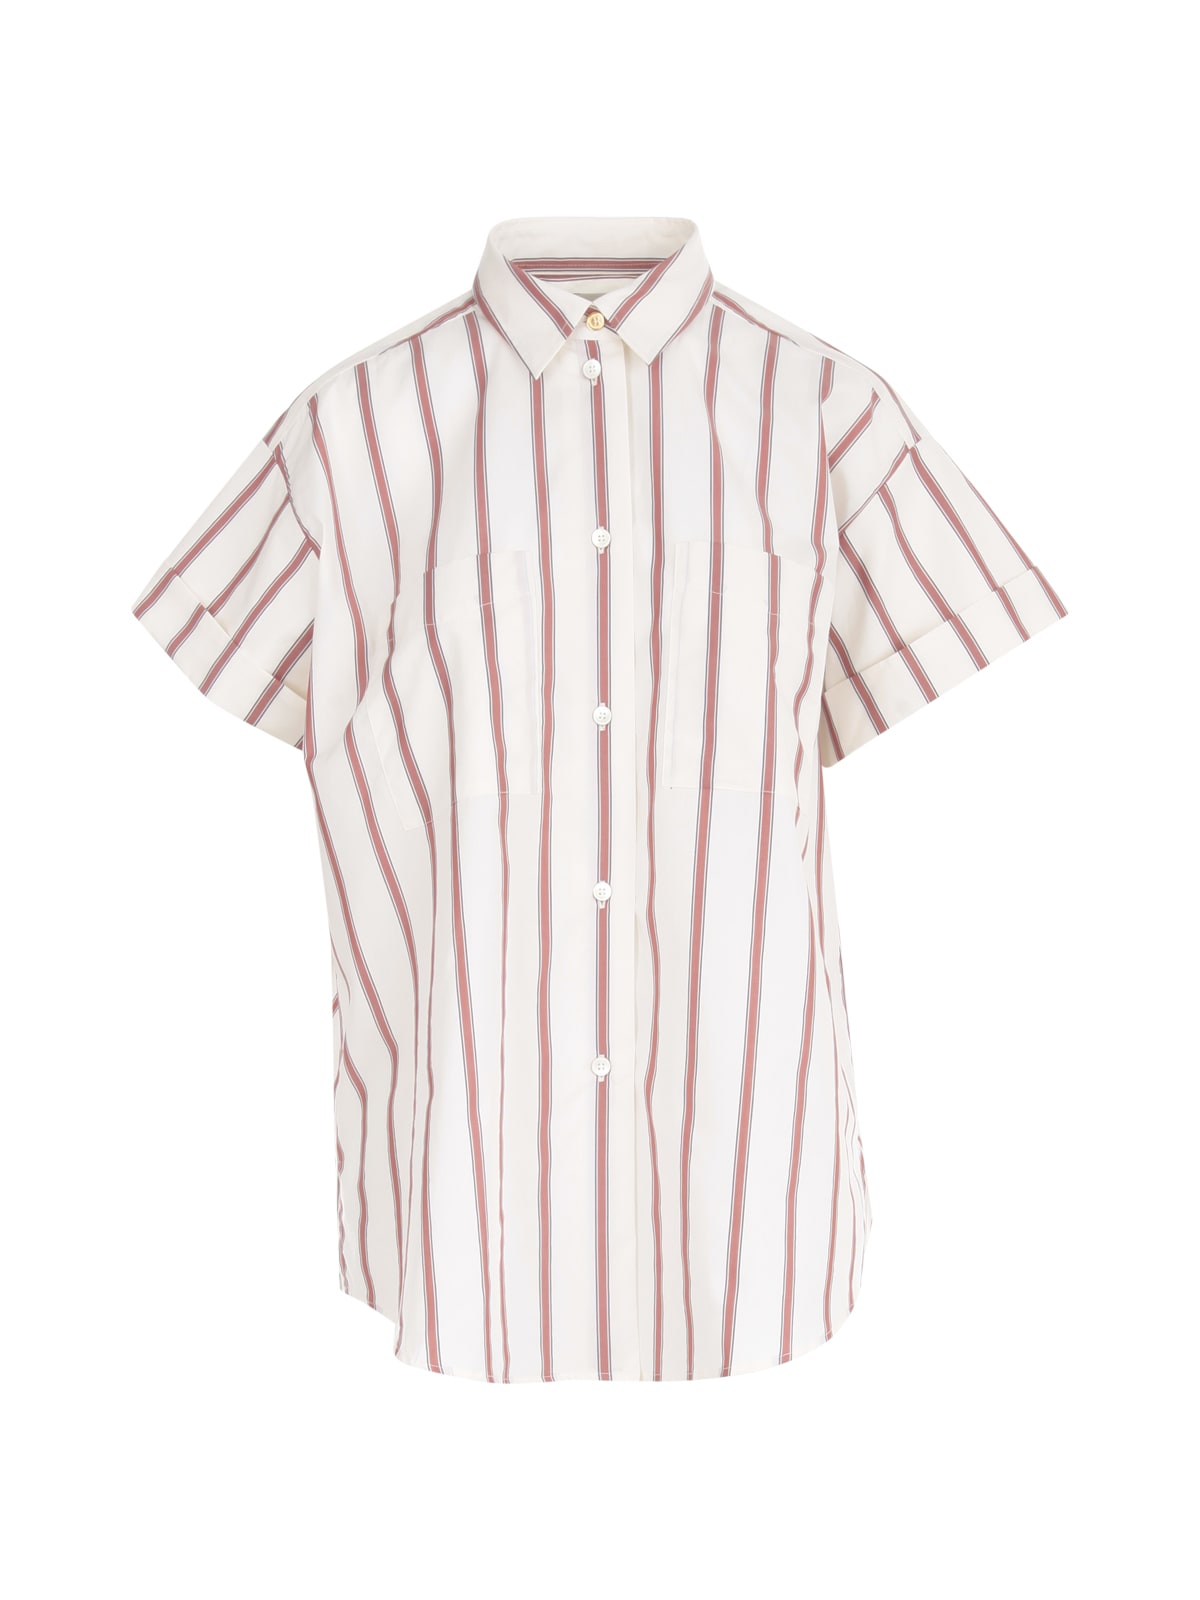 Paul Smith Oversized Striped S/s Shirt